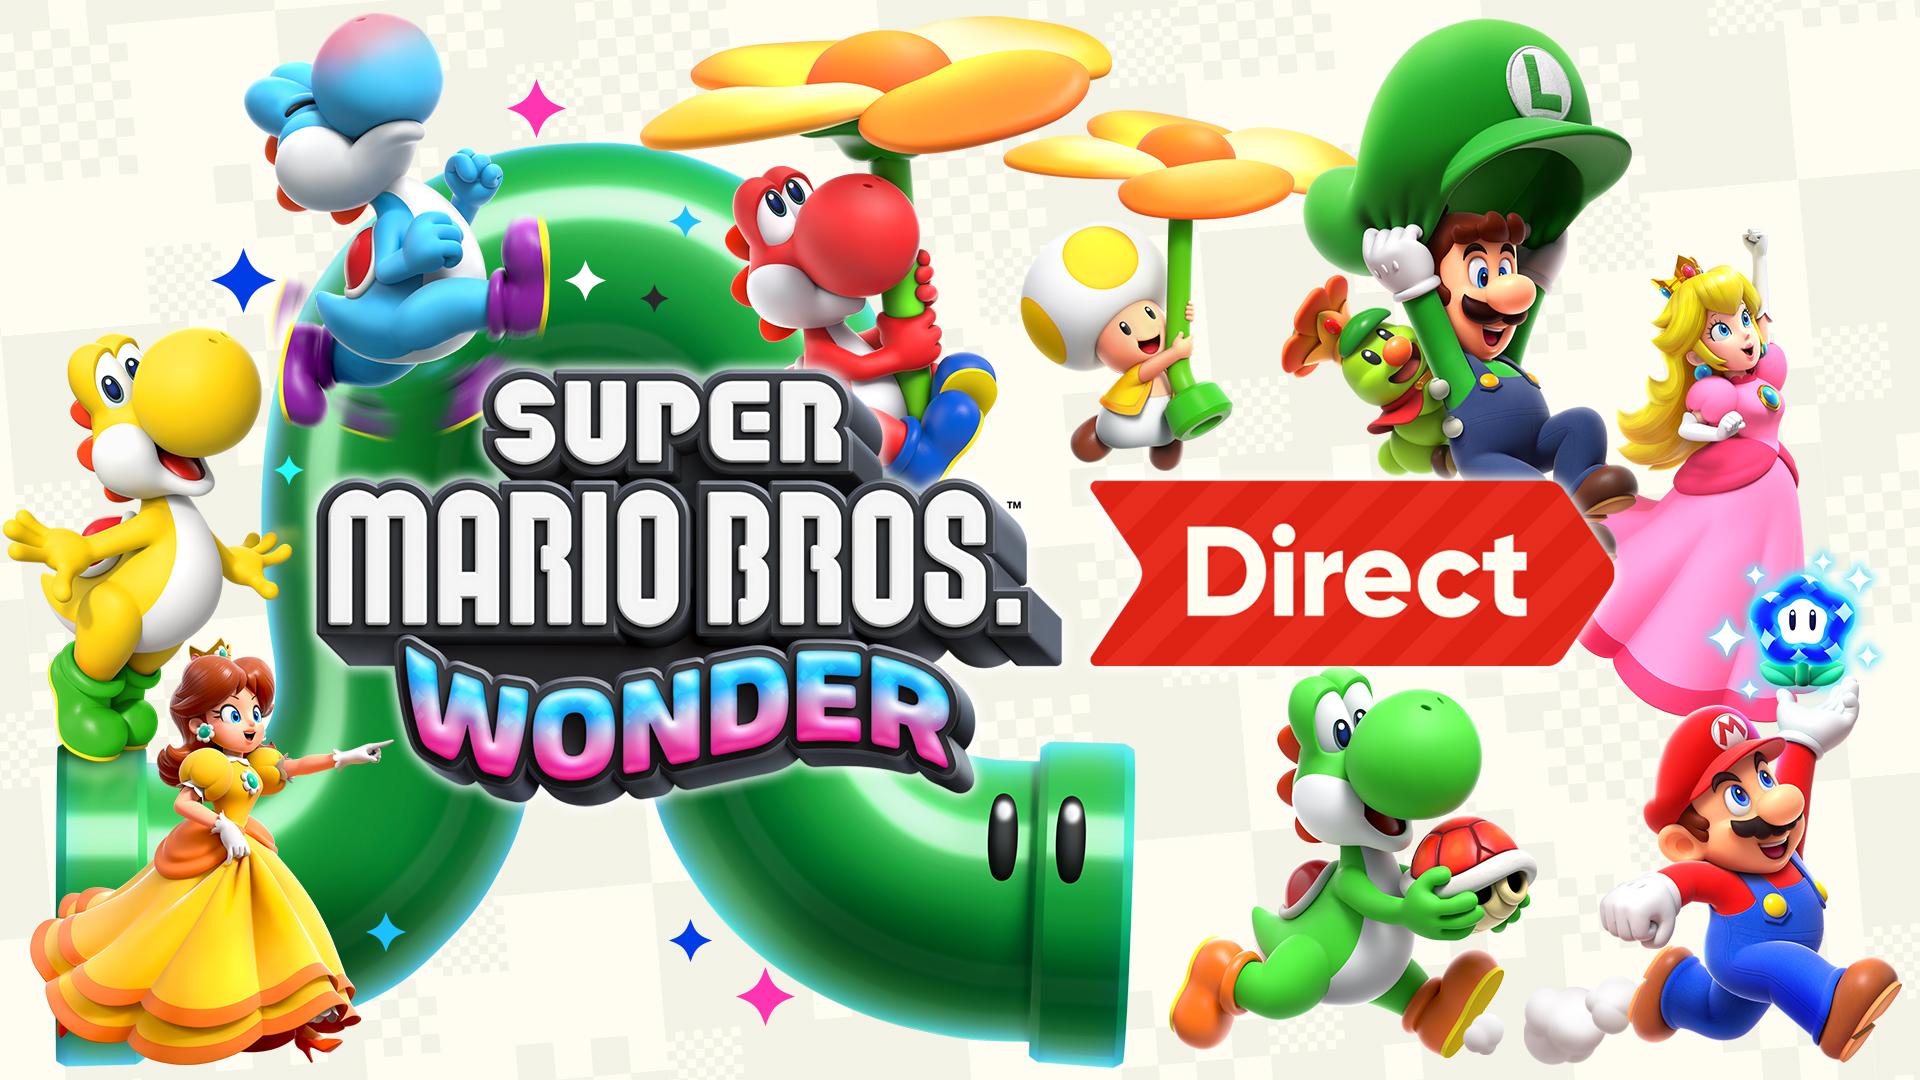 Super Mario Bros Wonder - Nintendo Direct